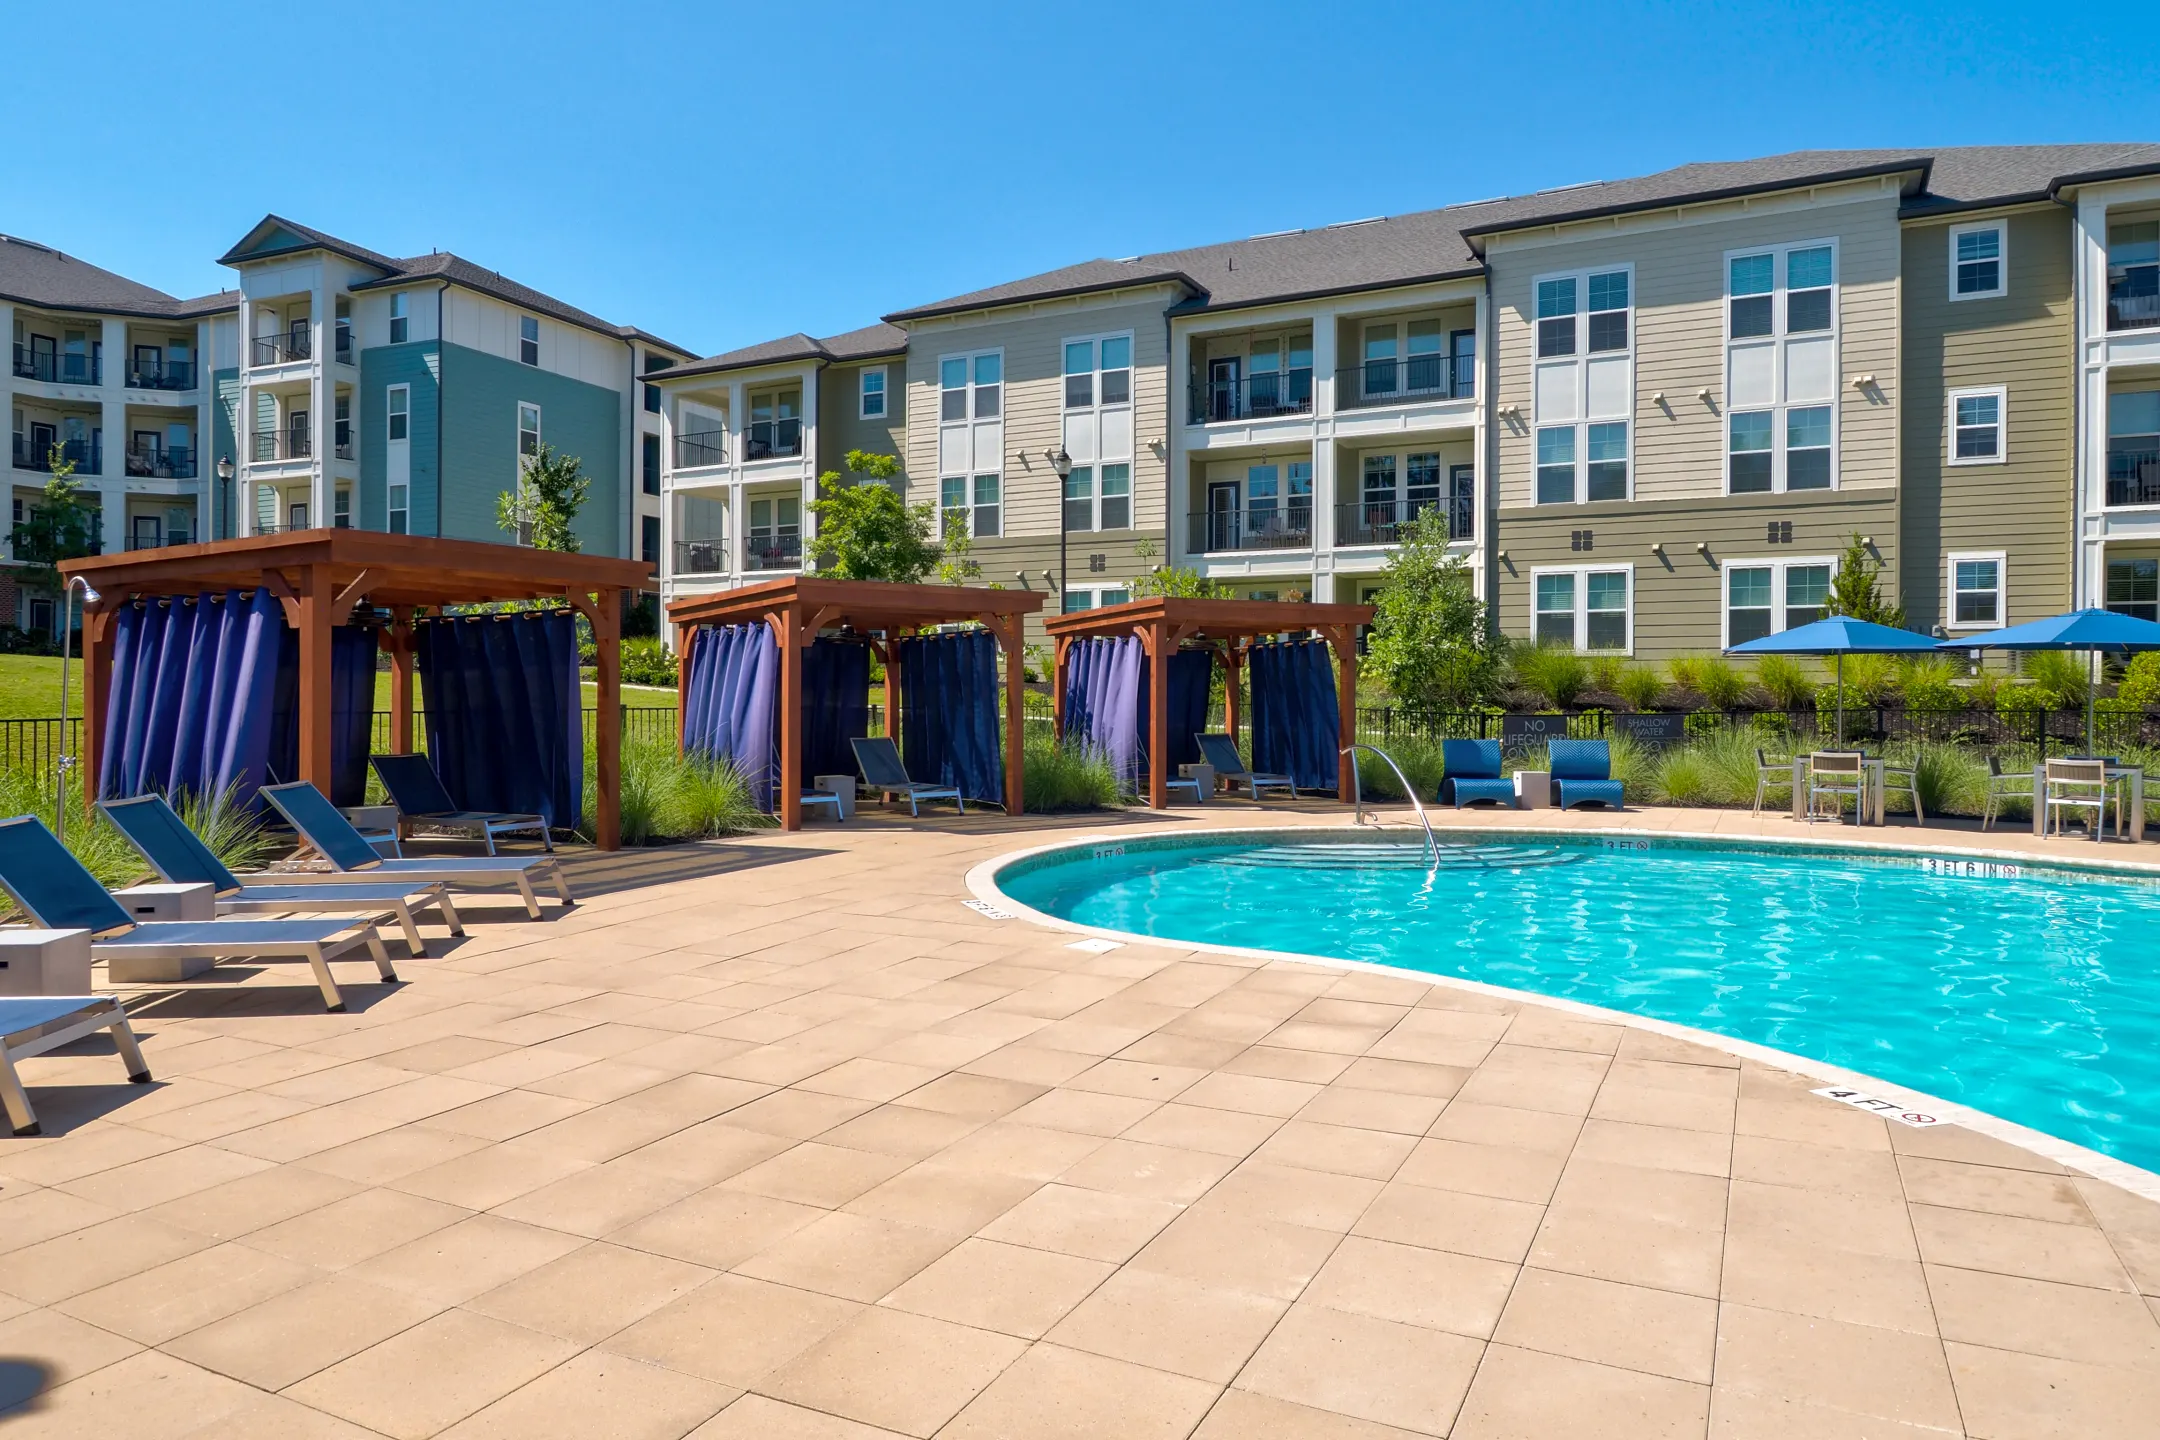 Pool - Trailside Verdae Apartments - Greenville, SC